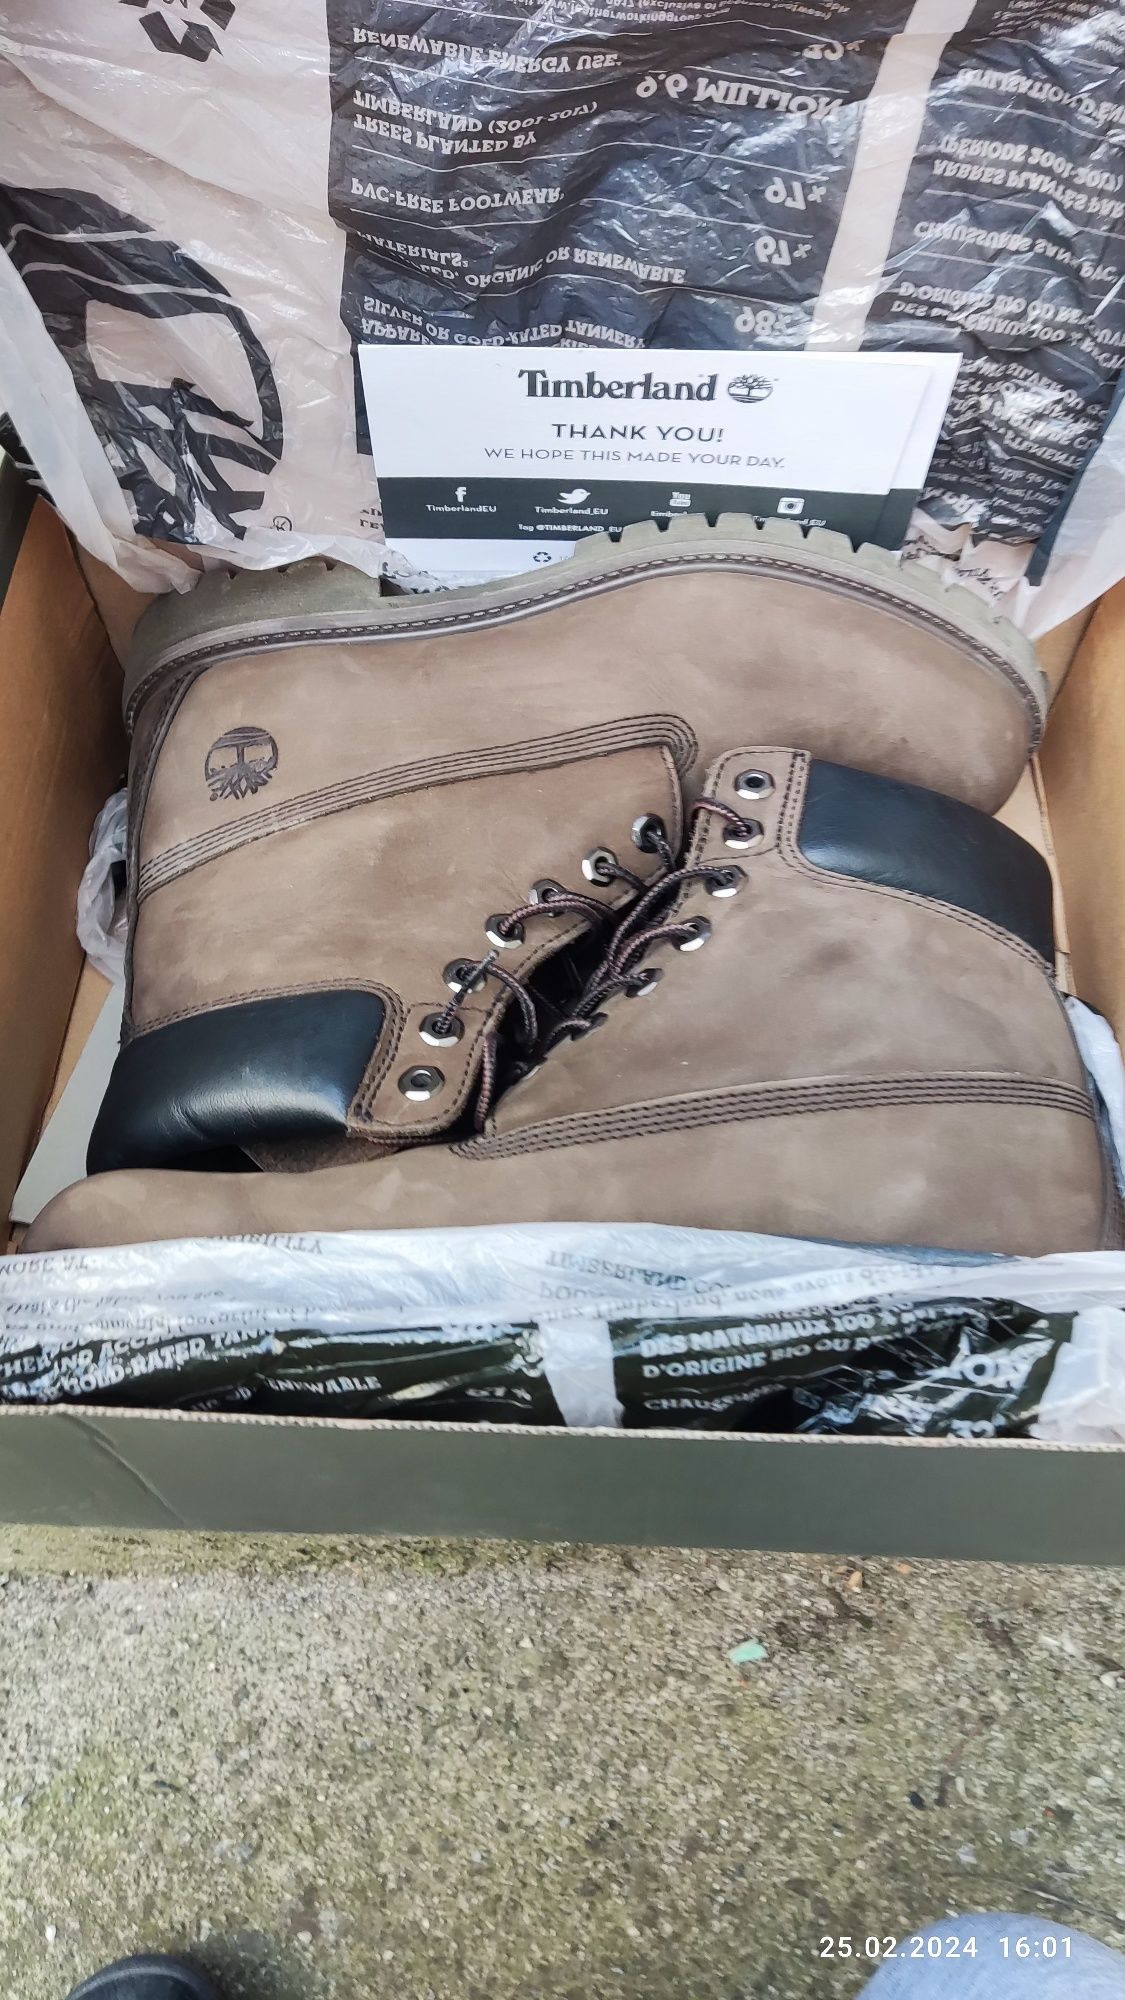 " Timberland" Premium 6 in waterproof boots